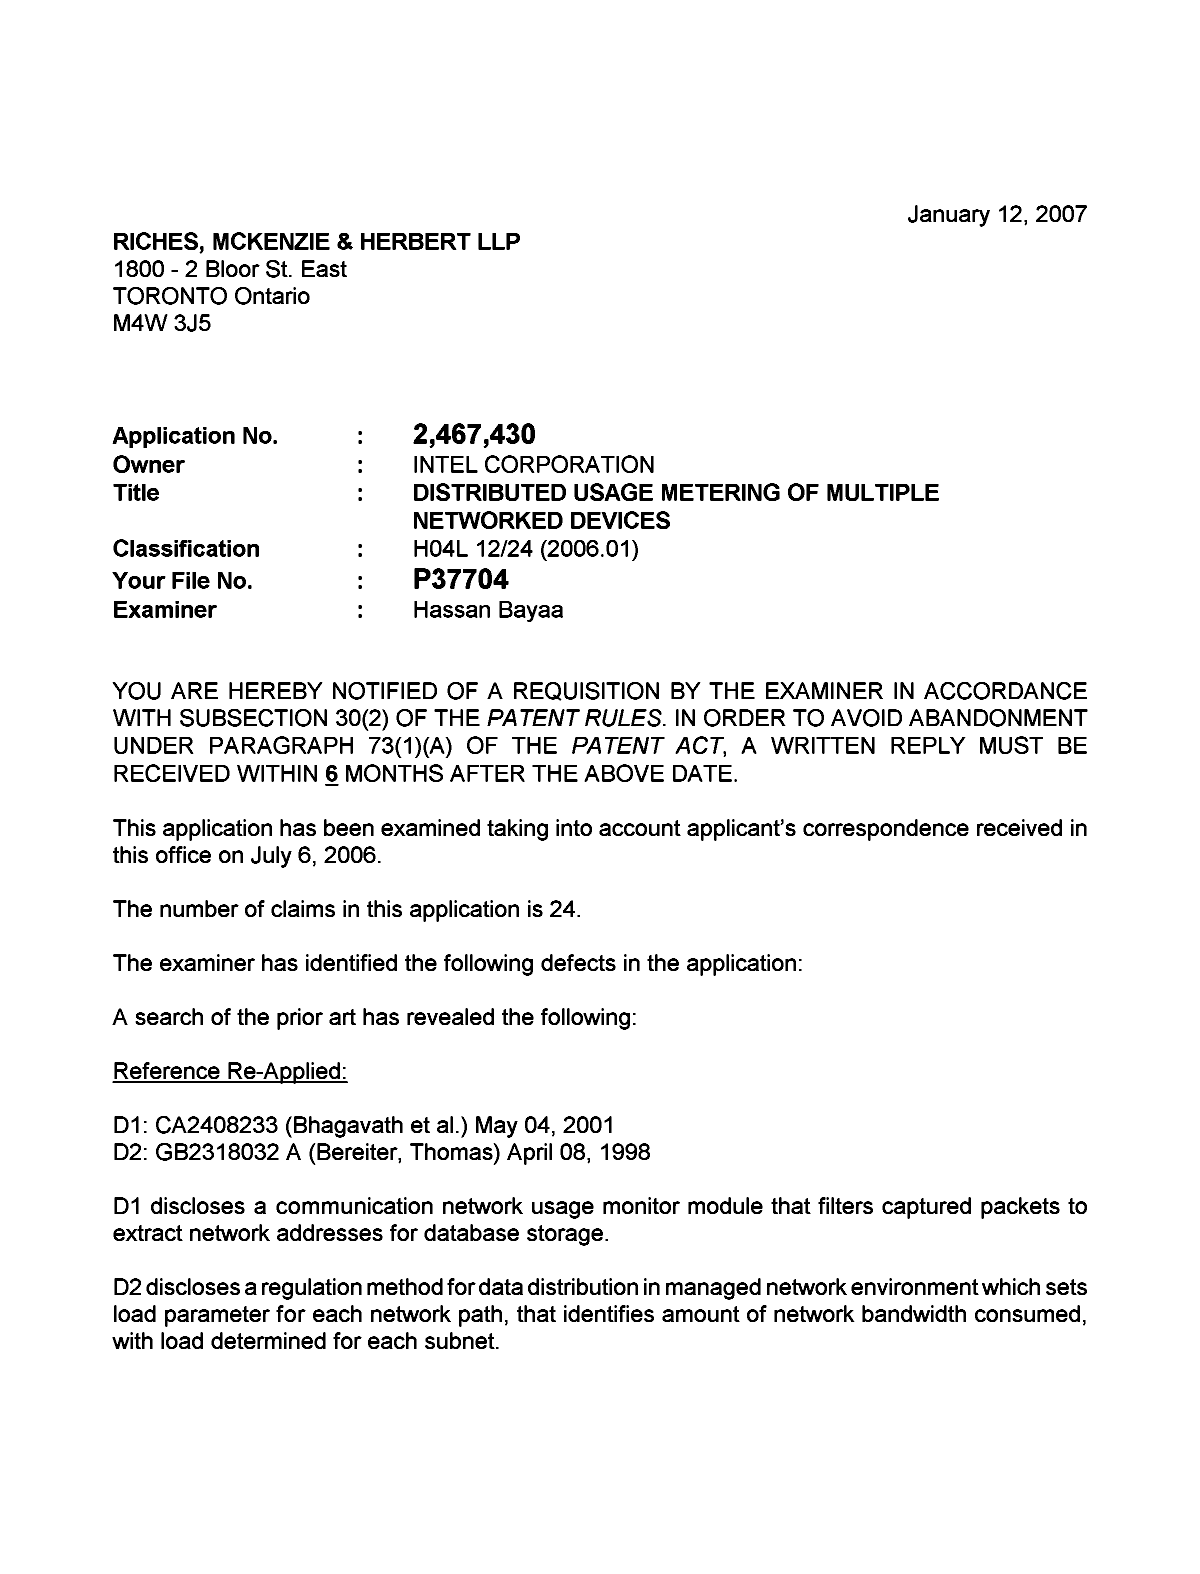 Canadian Patent Document 2467430. Prosecution-Amendment 20070112. Image 1 of 2